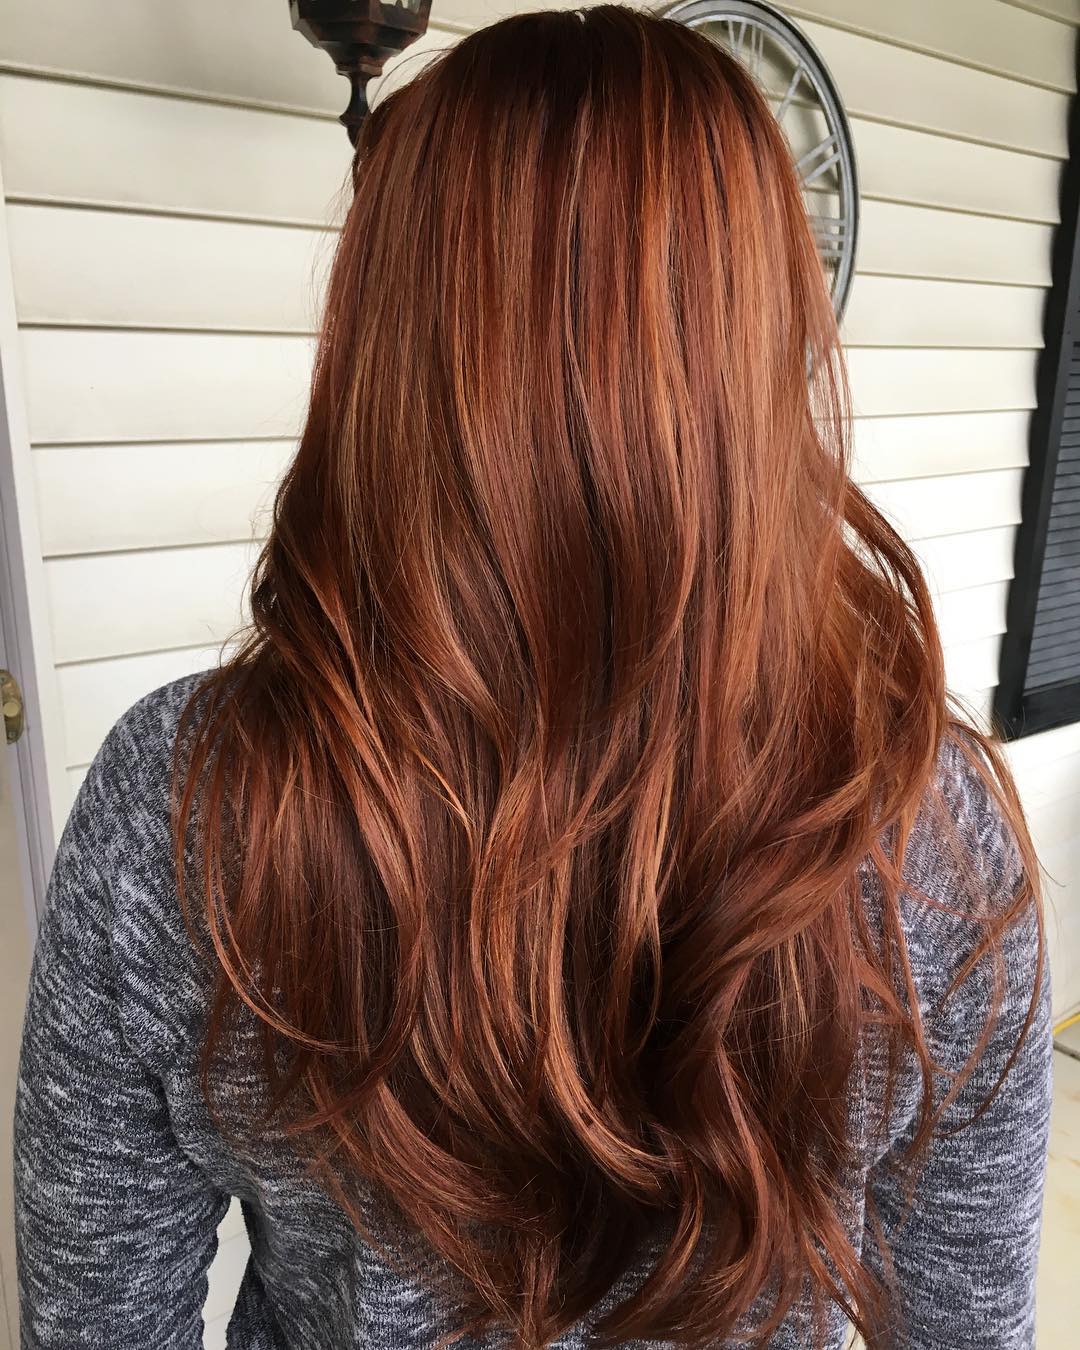 Reddish-brown Auburn